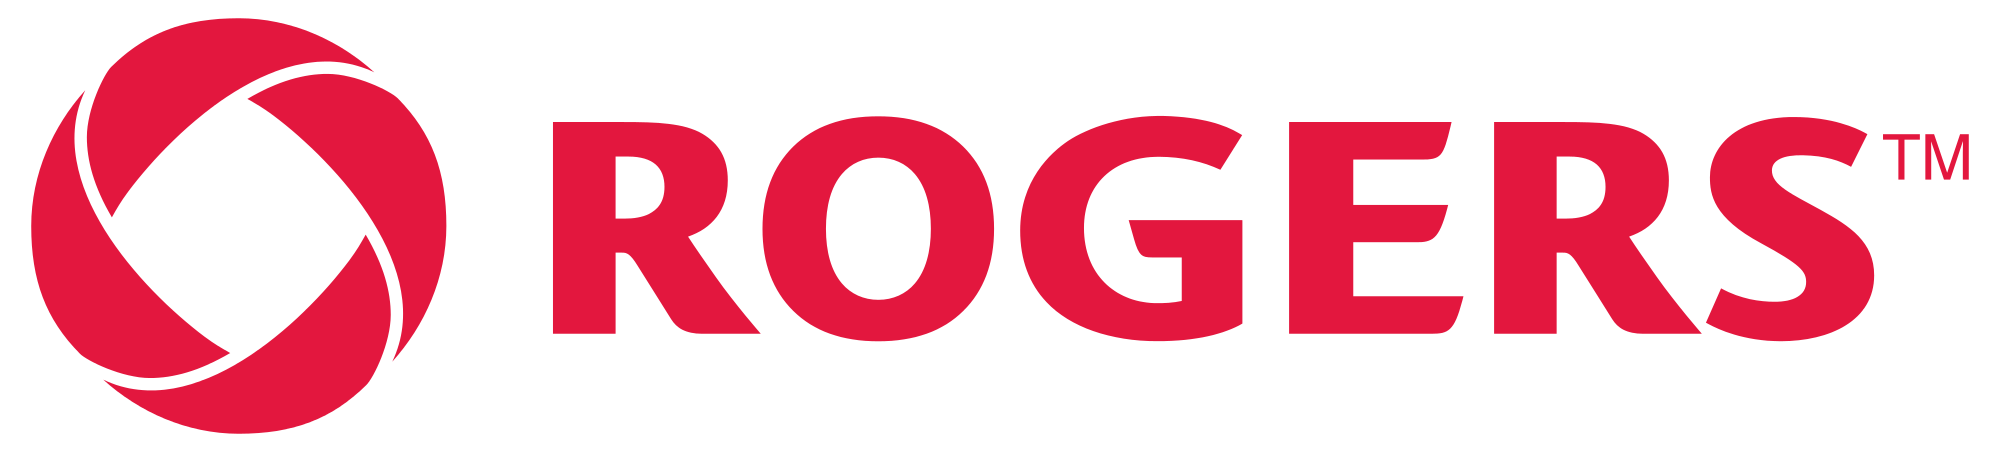 https://cdn.mobilesyrup.com/wp-content/uploads/2017/08/Rogers_logo.png